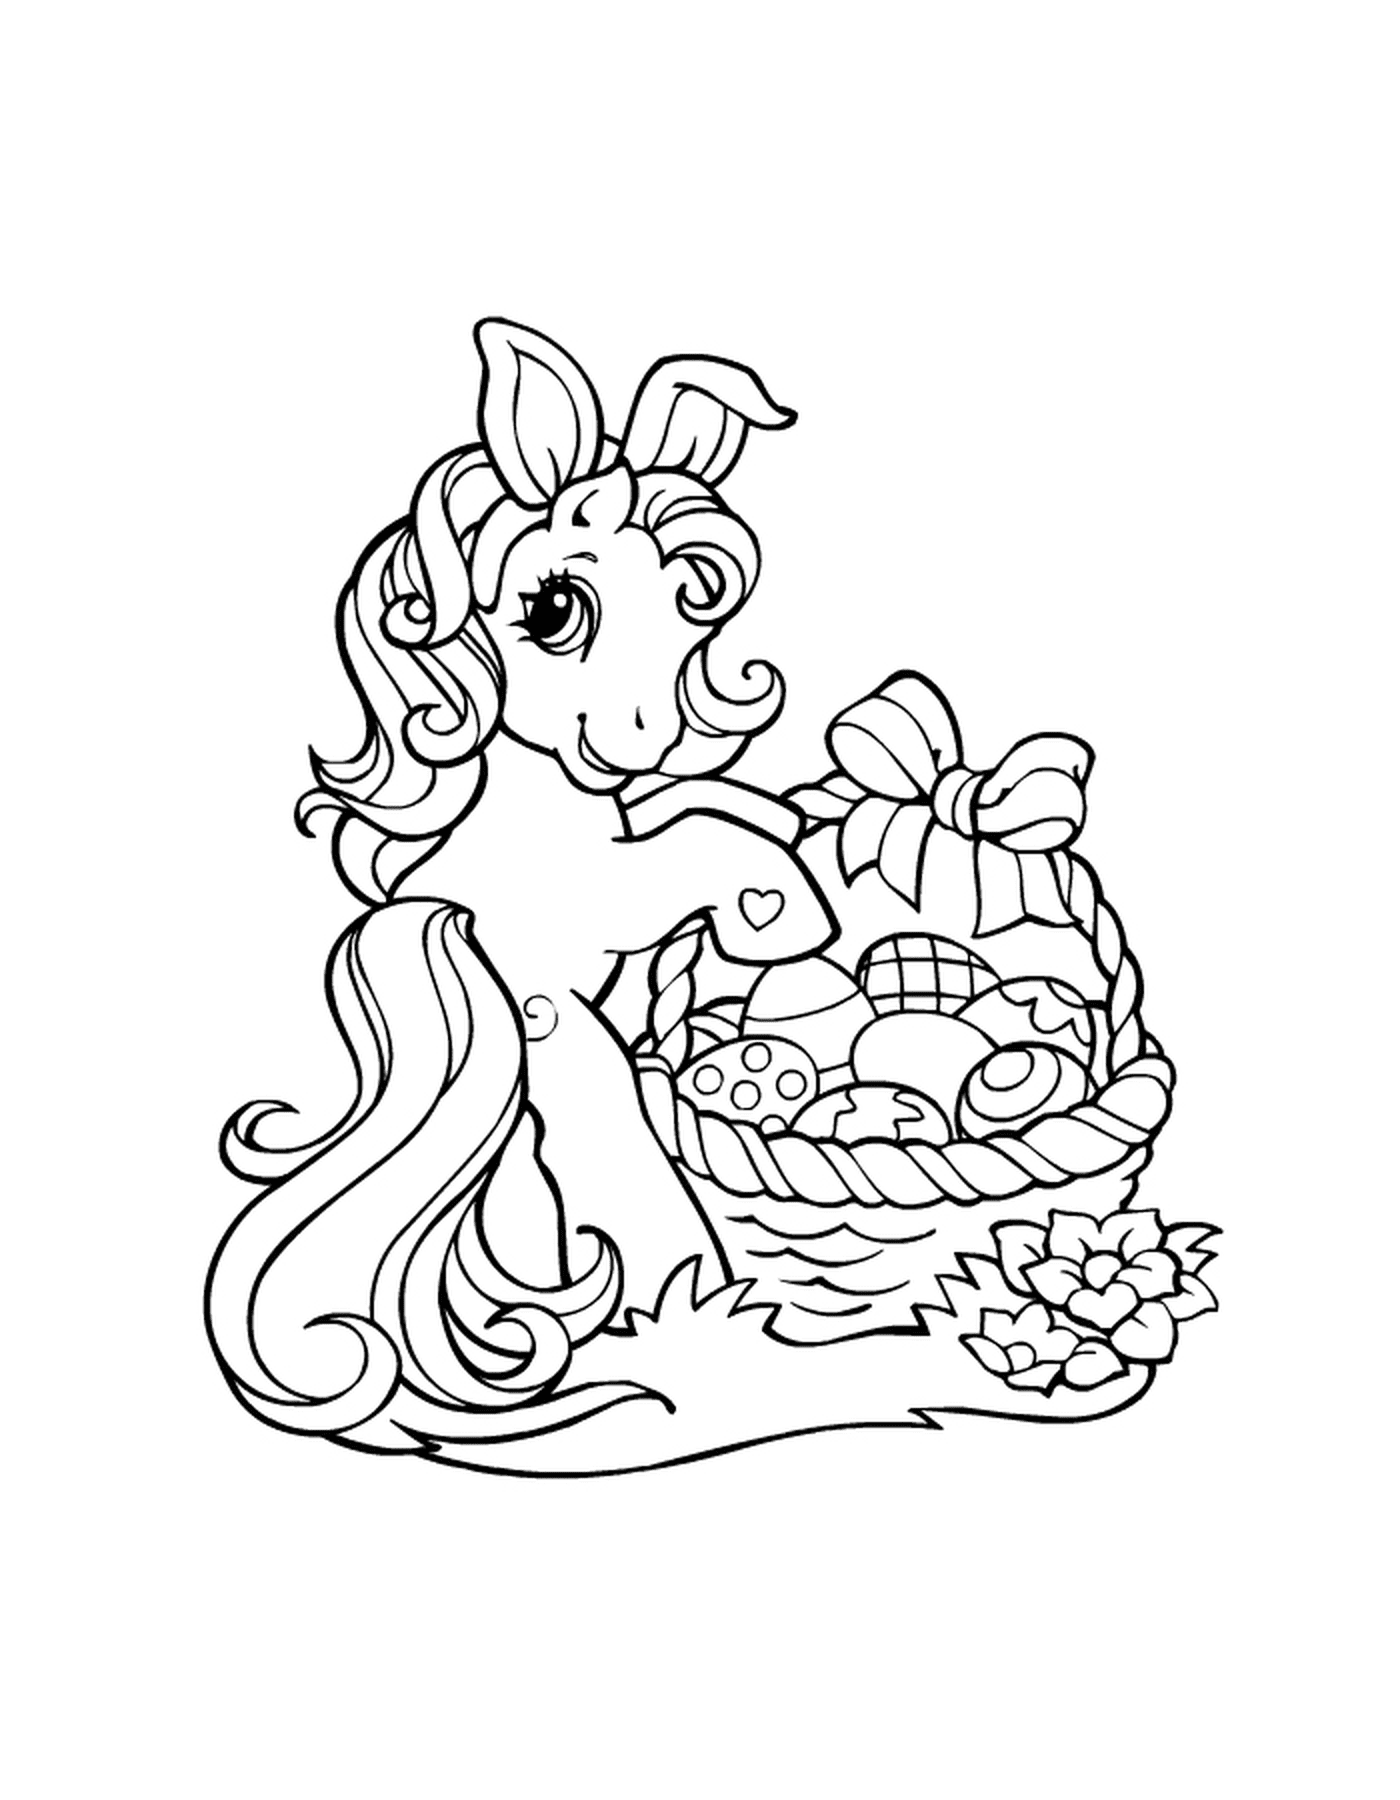   Un poney tenant un panier d'œufs de Pâques 